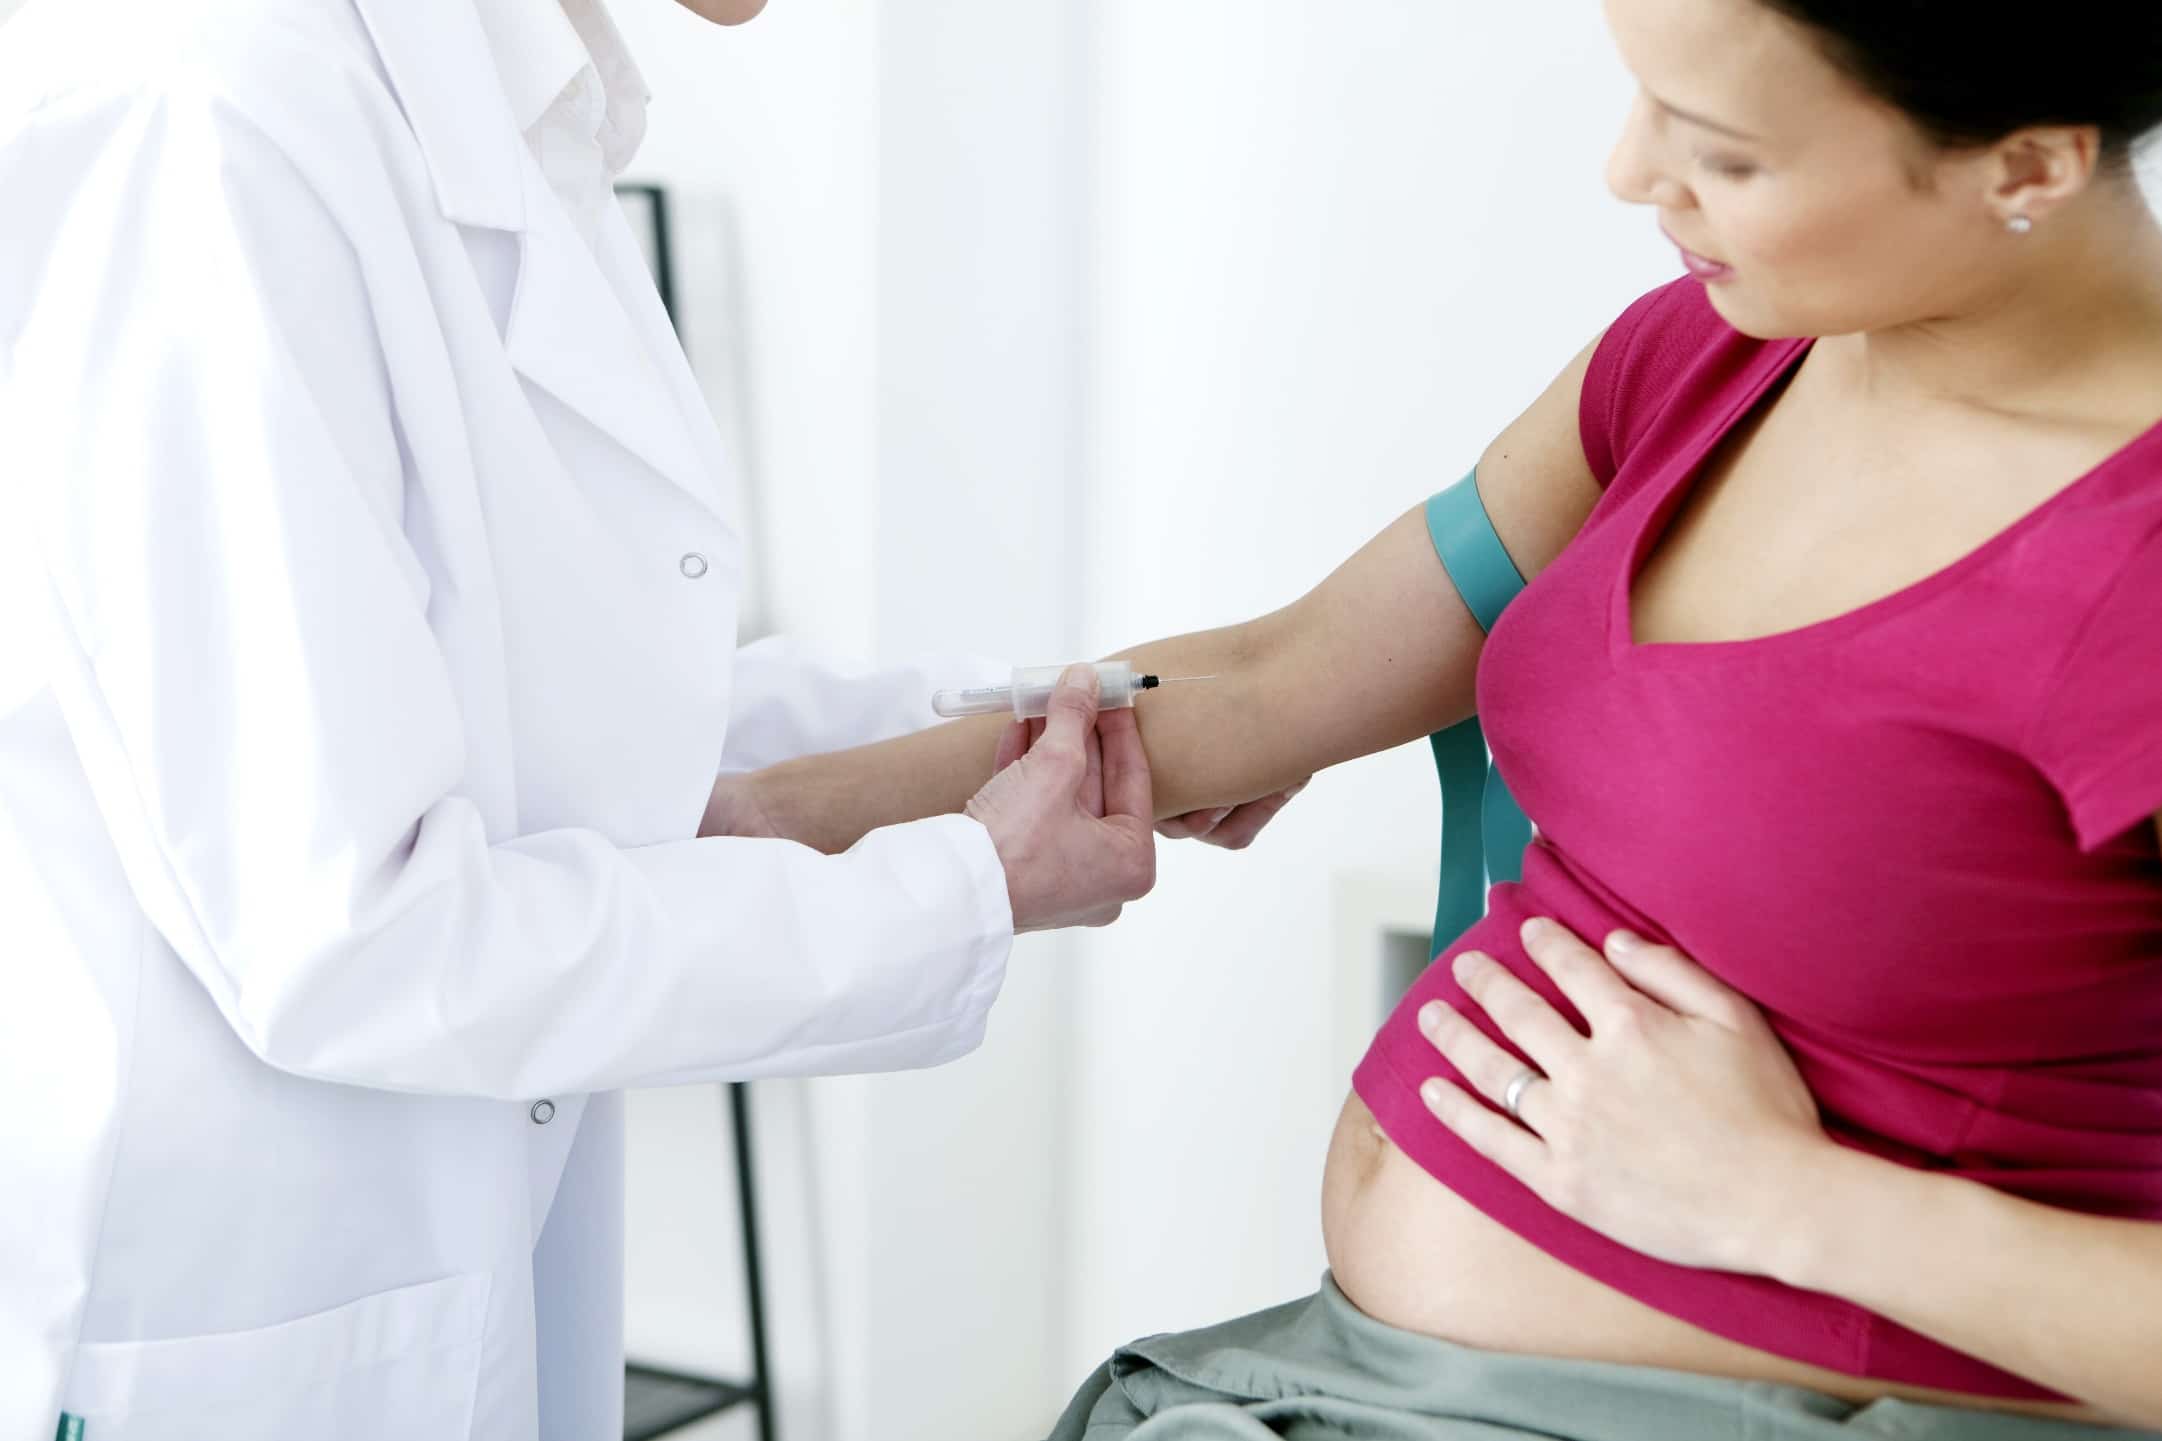 Blood Tests During Pregnancy